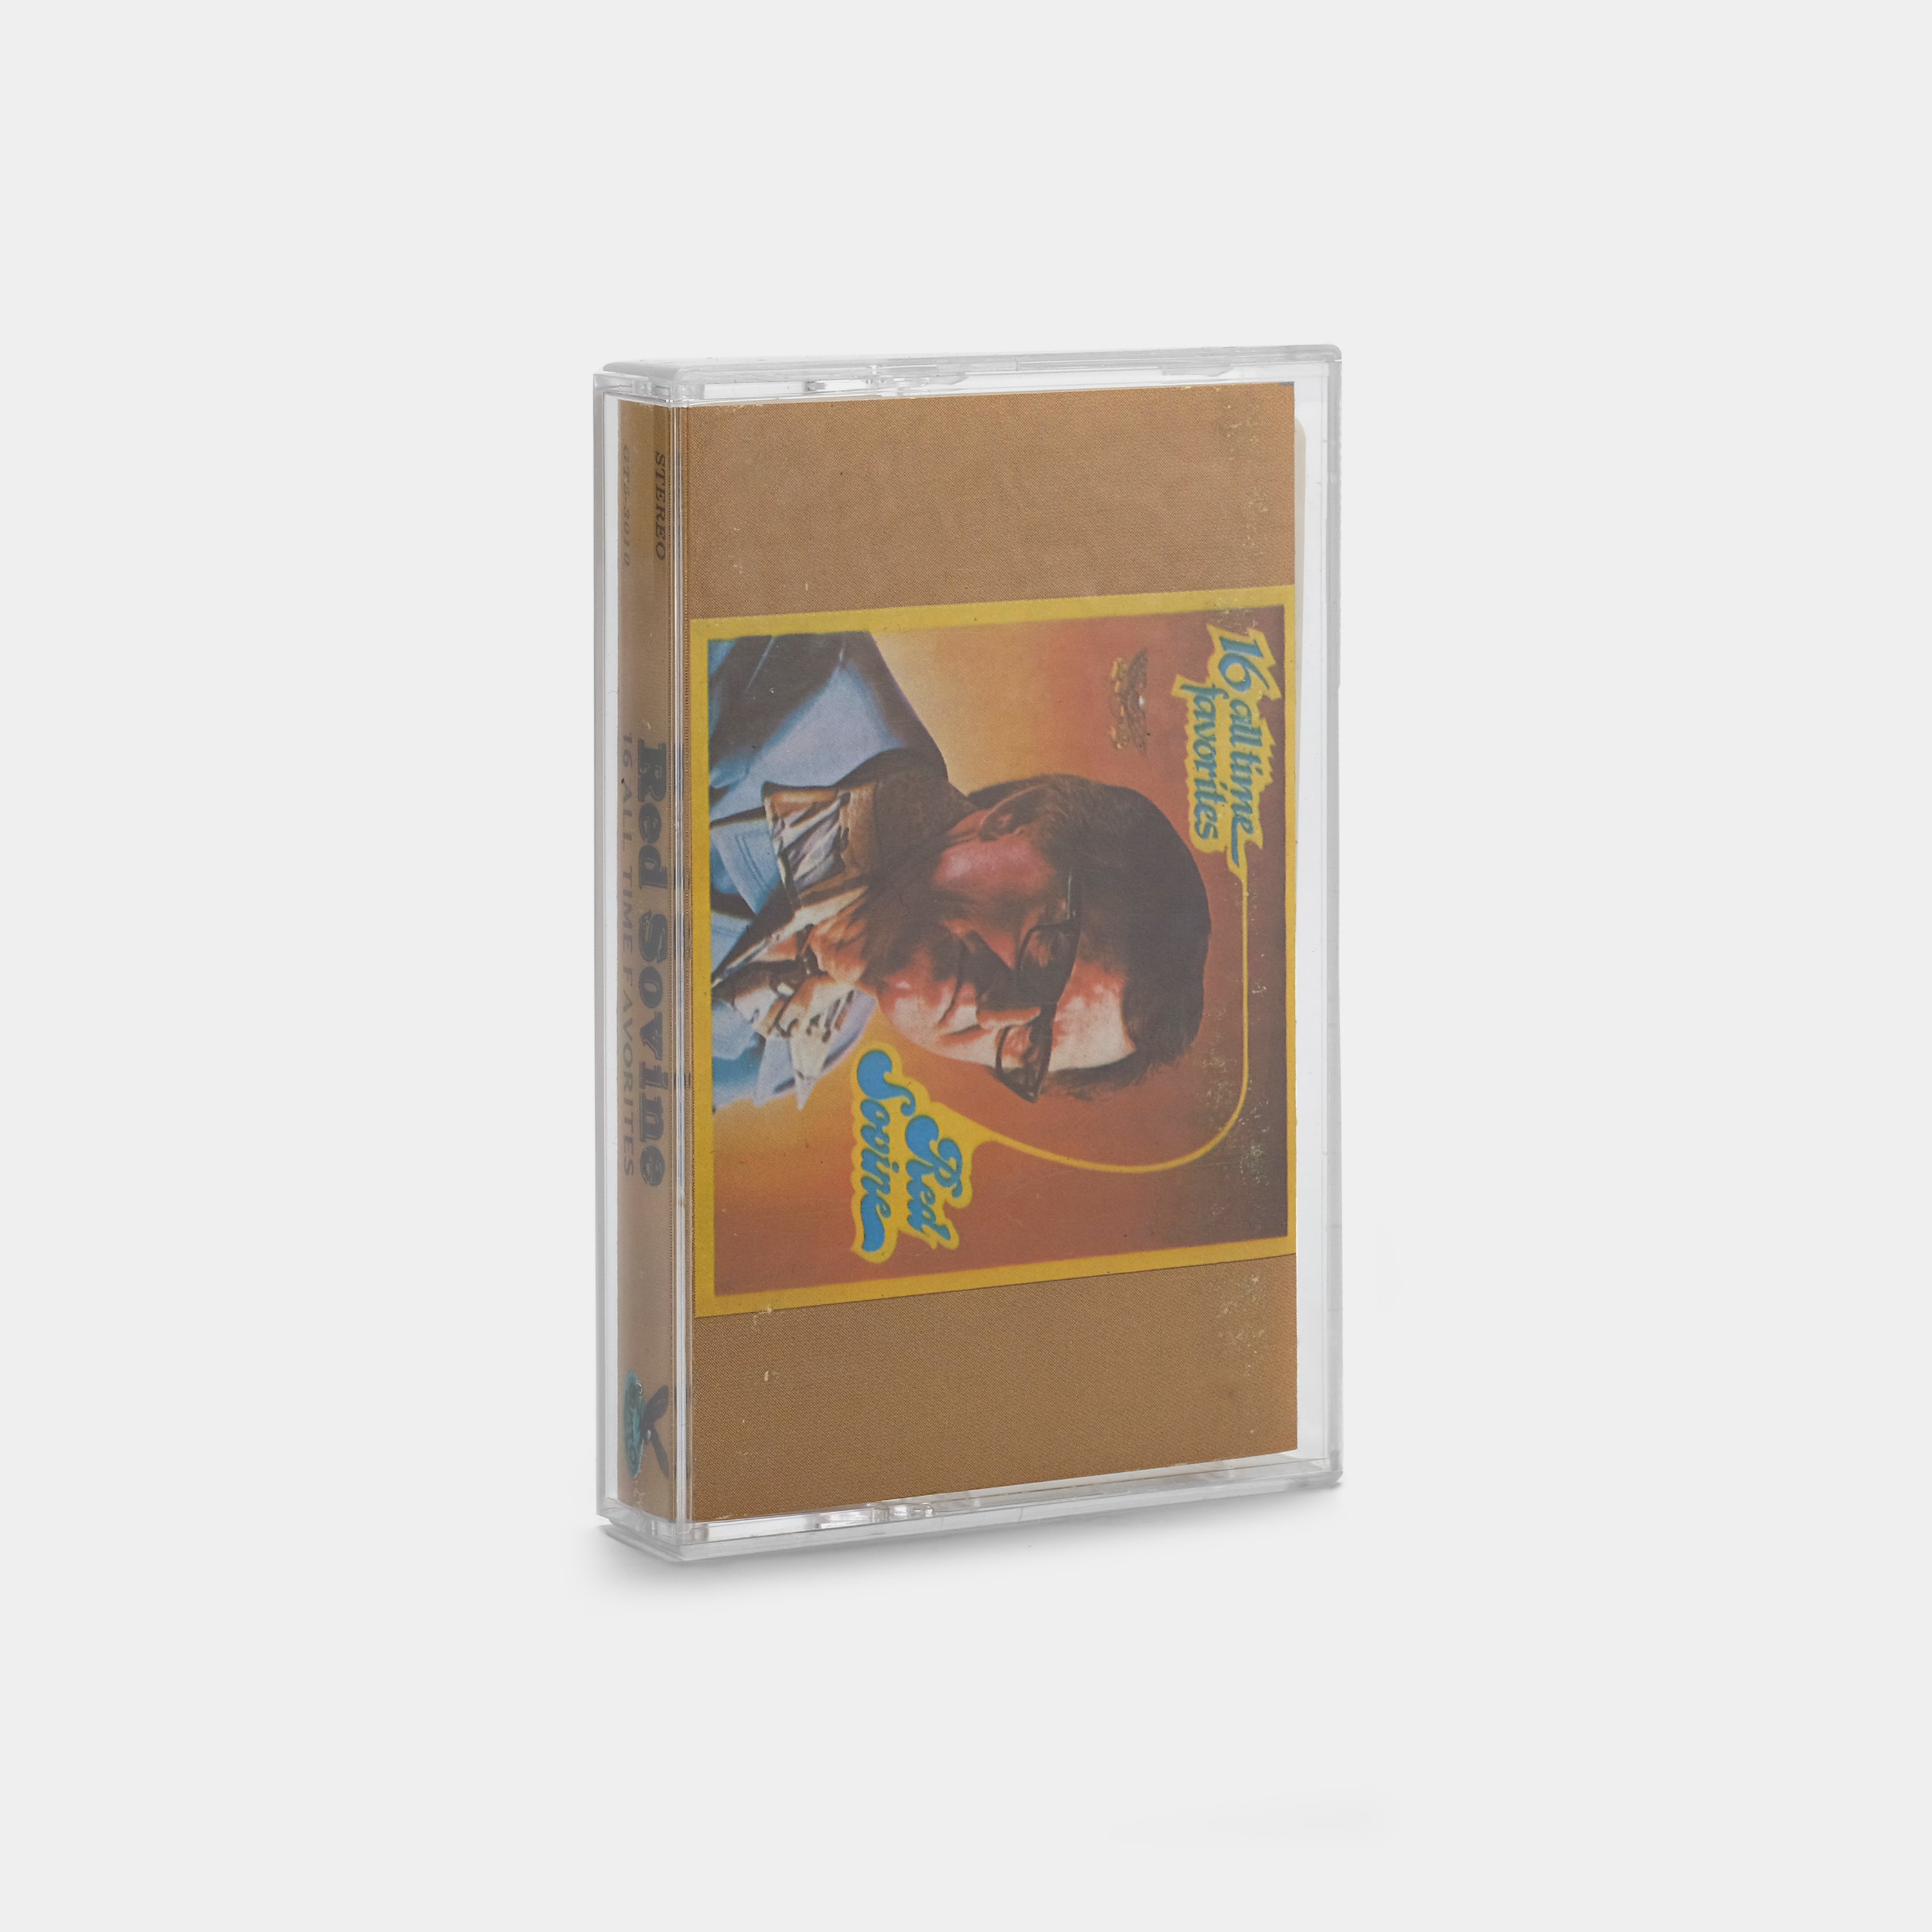 Red Sovine - 16 All Time Favorites Cassette Tape